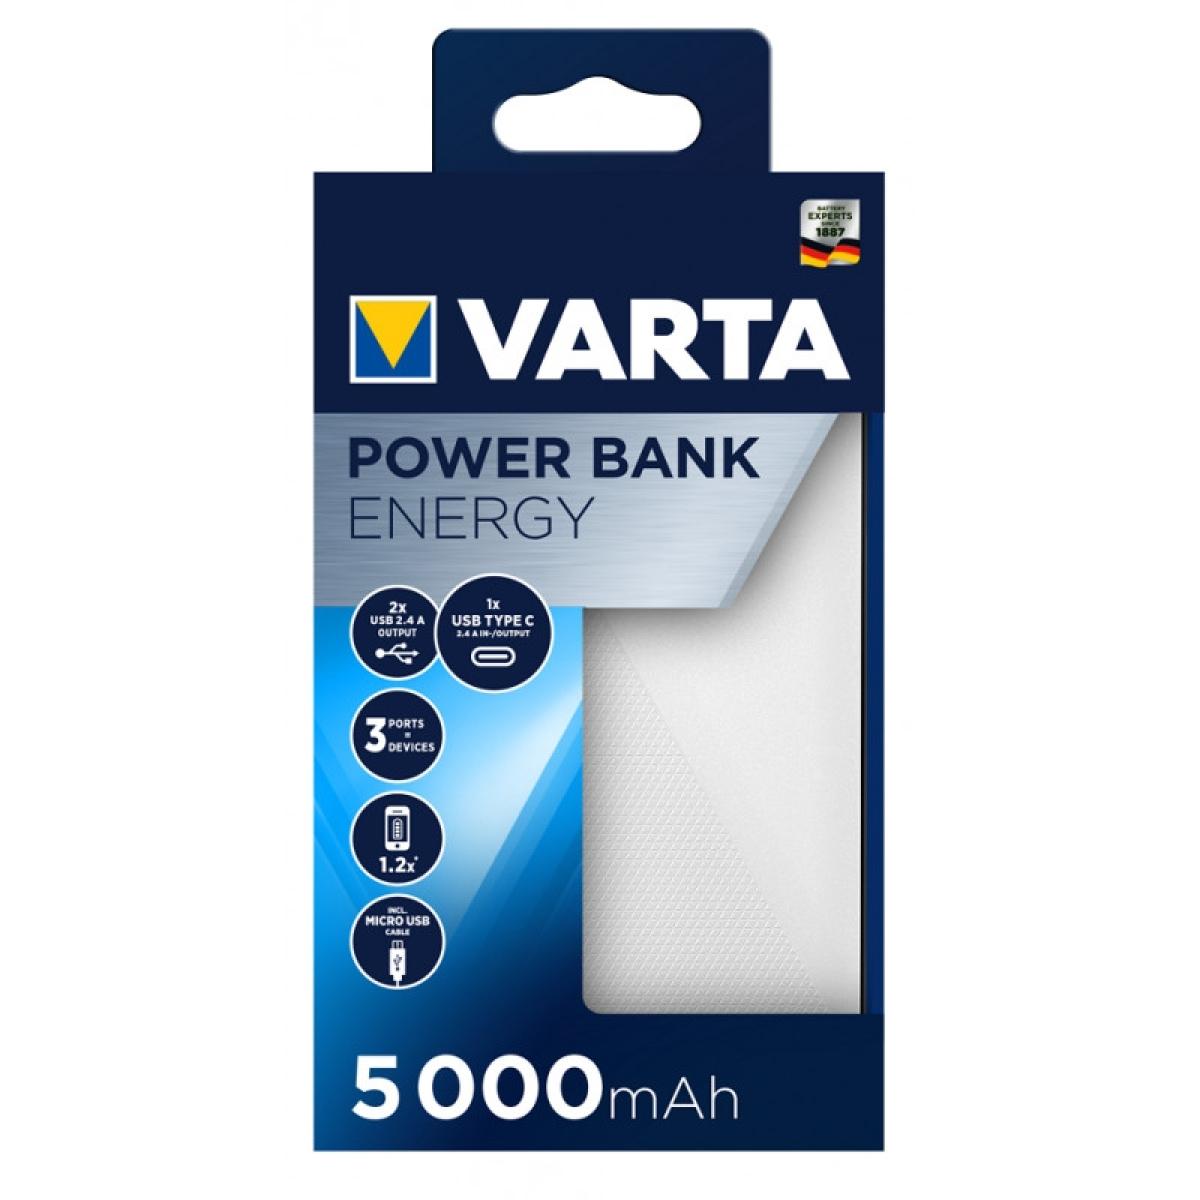 Varta - POWER BANK ENERGY 5000